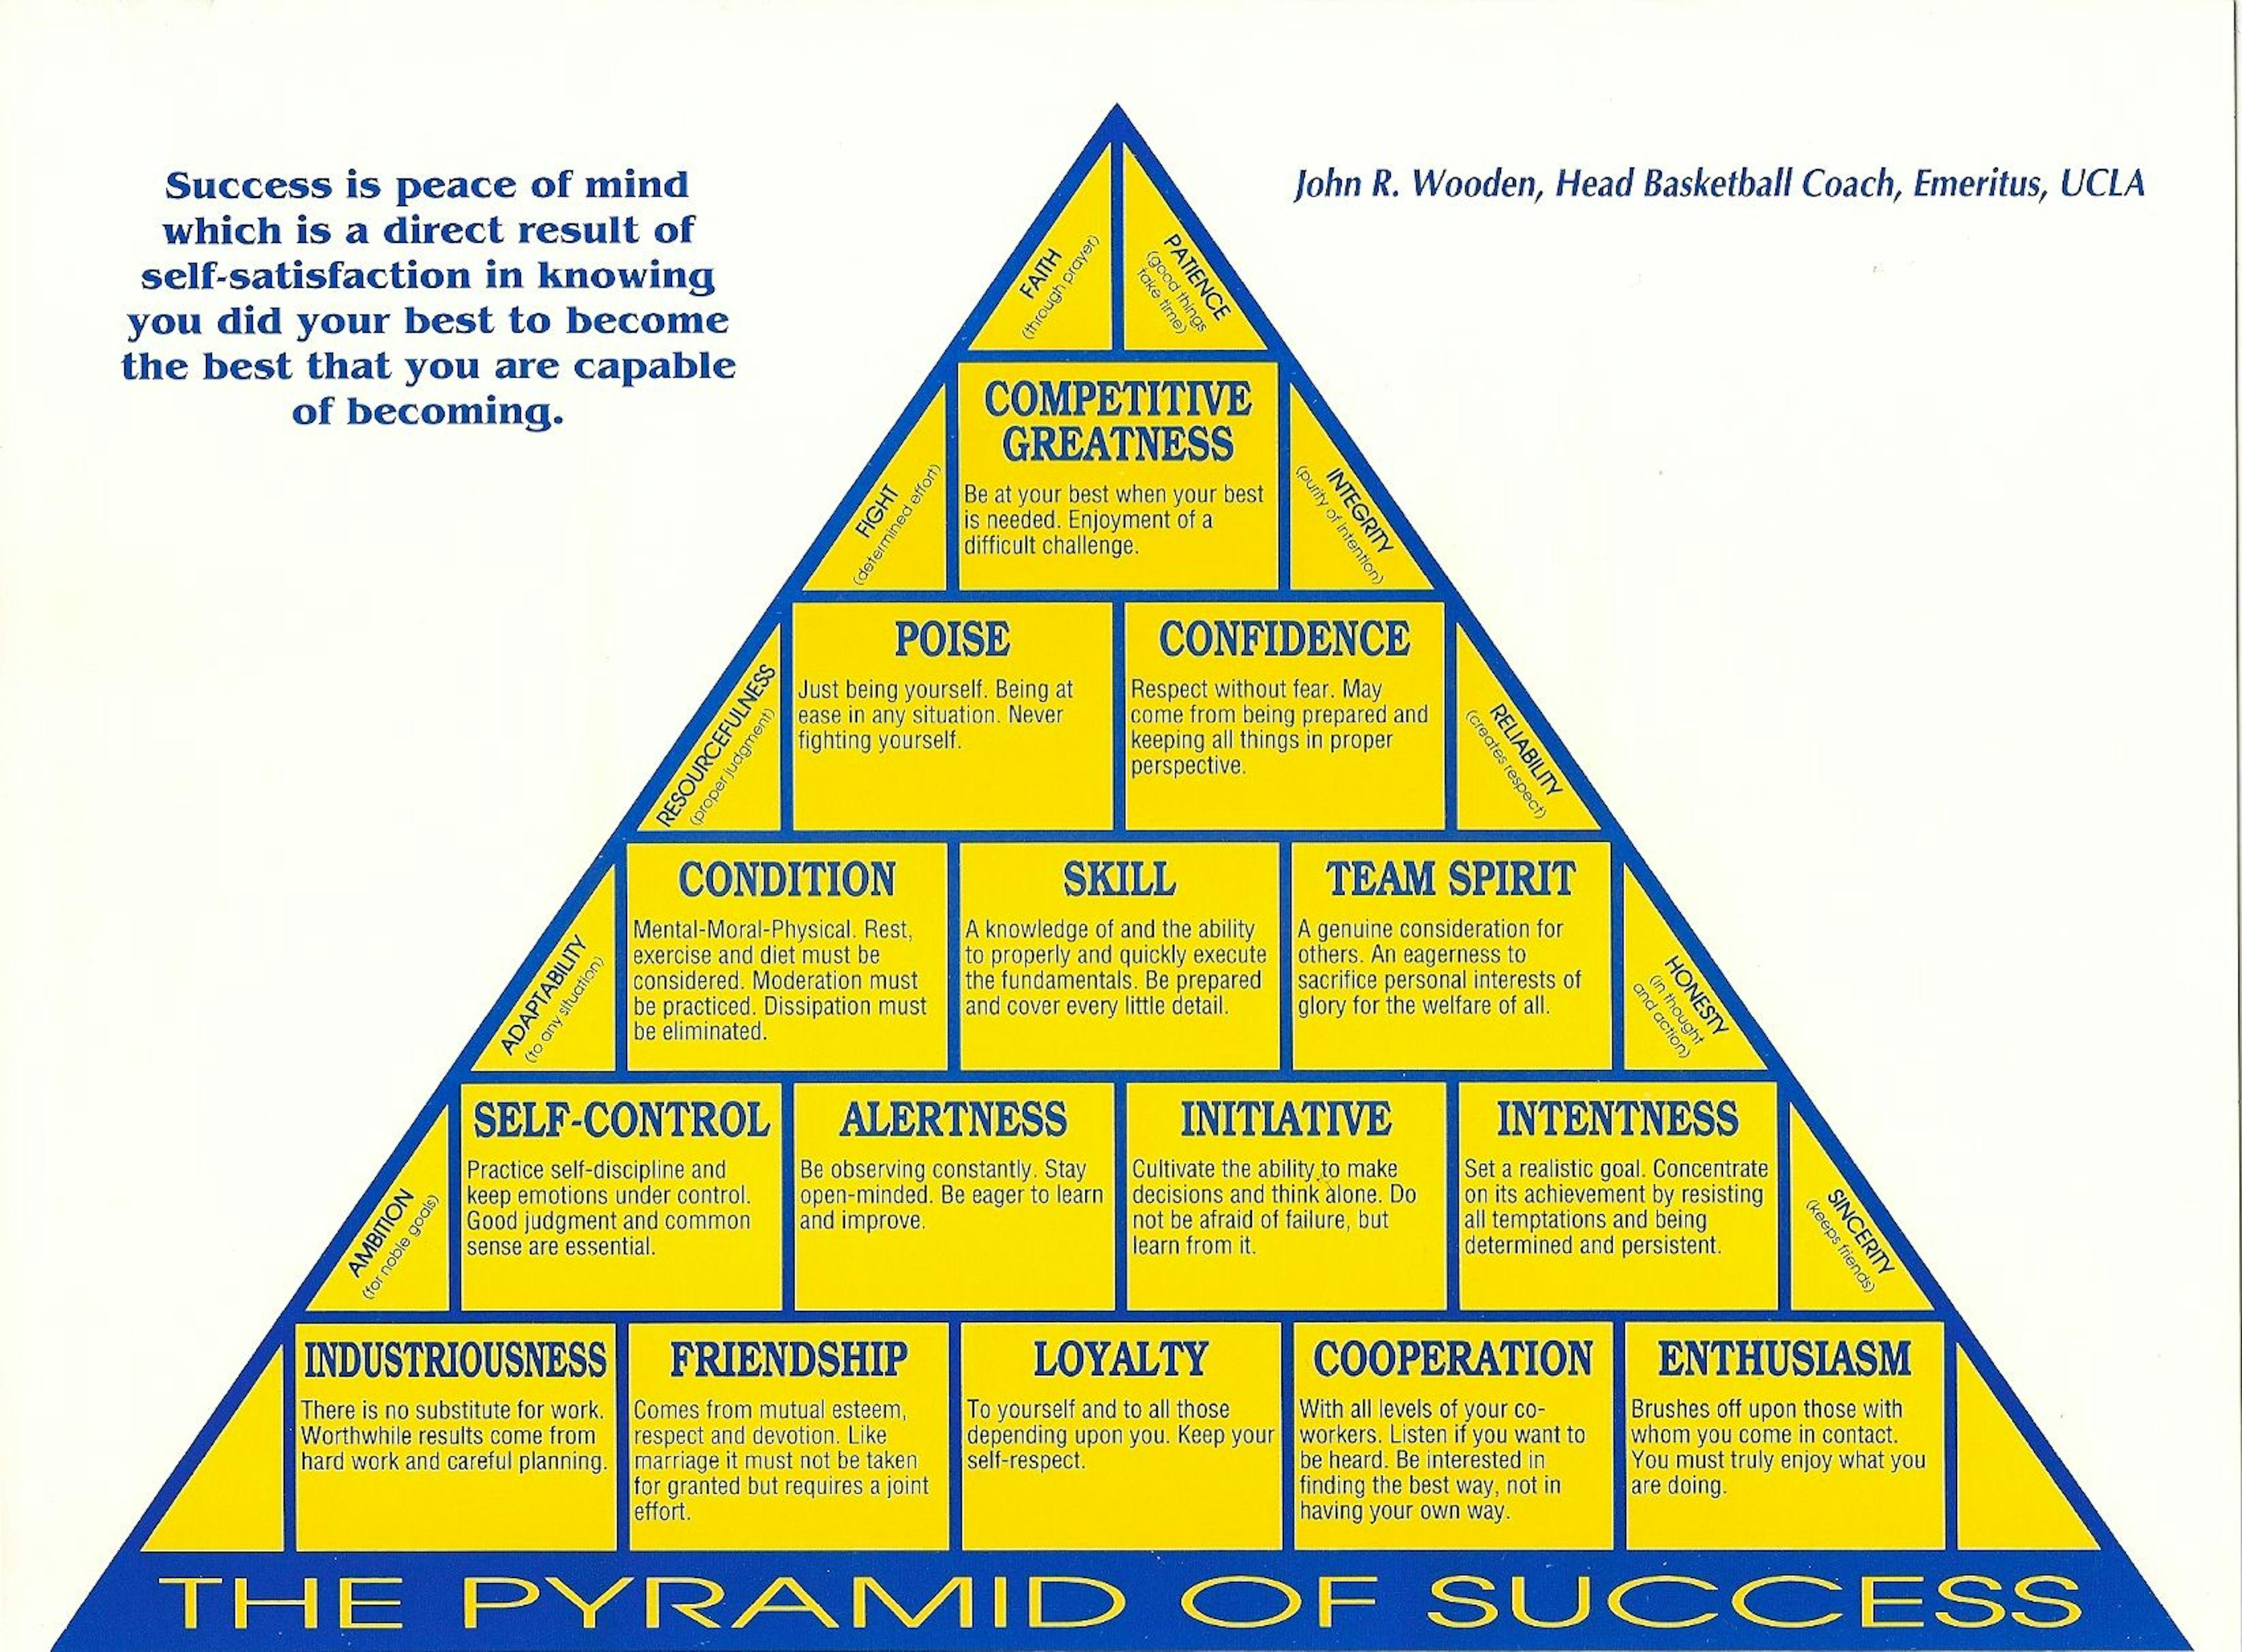 Coach John Wooden’s Pyramid of Success.